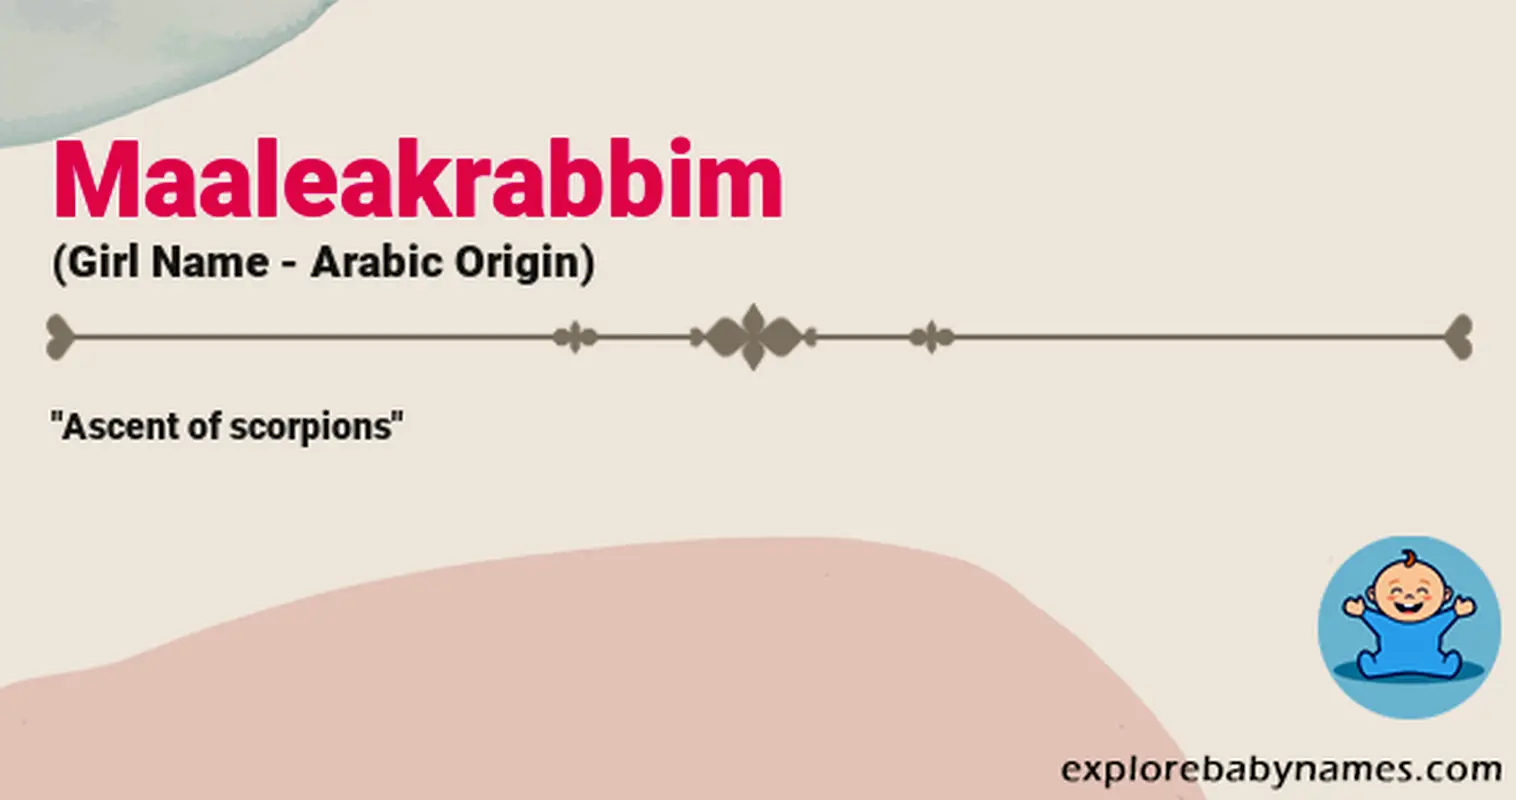 Meaning of Maaleakrabbim